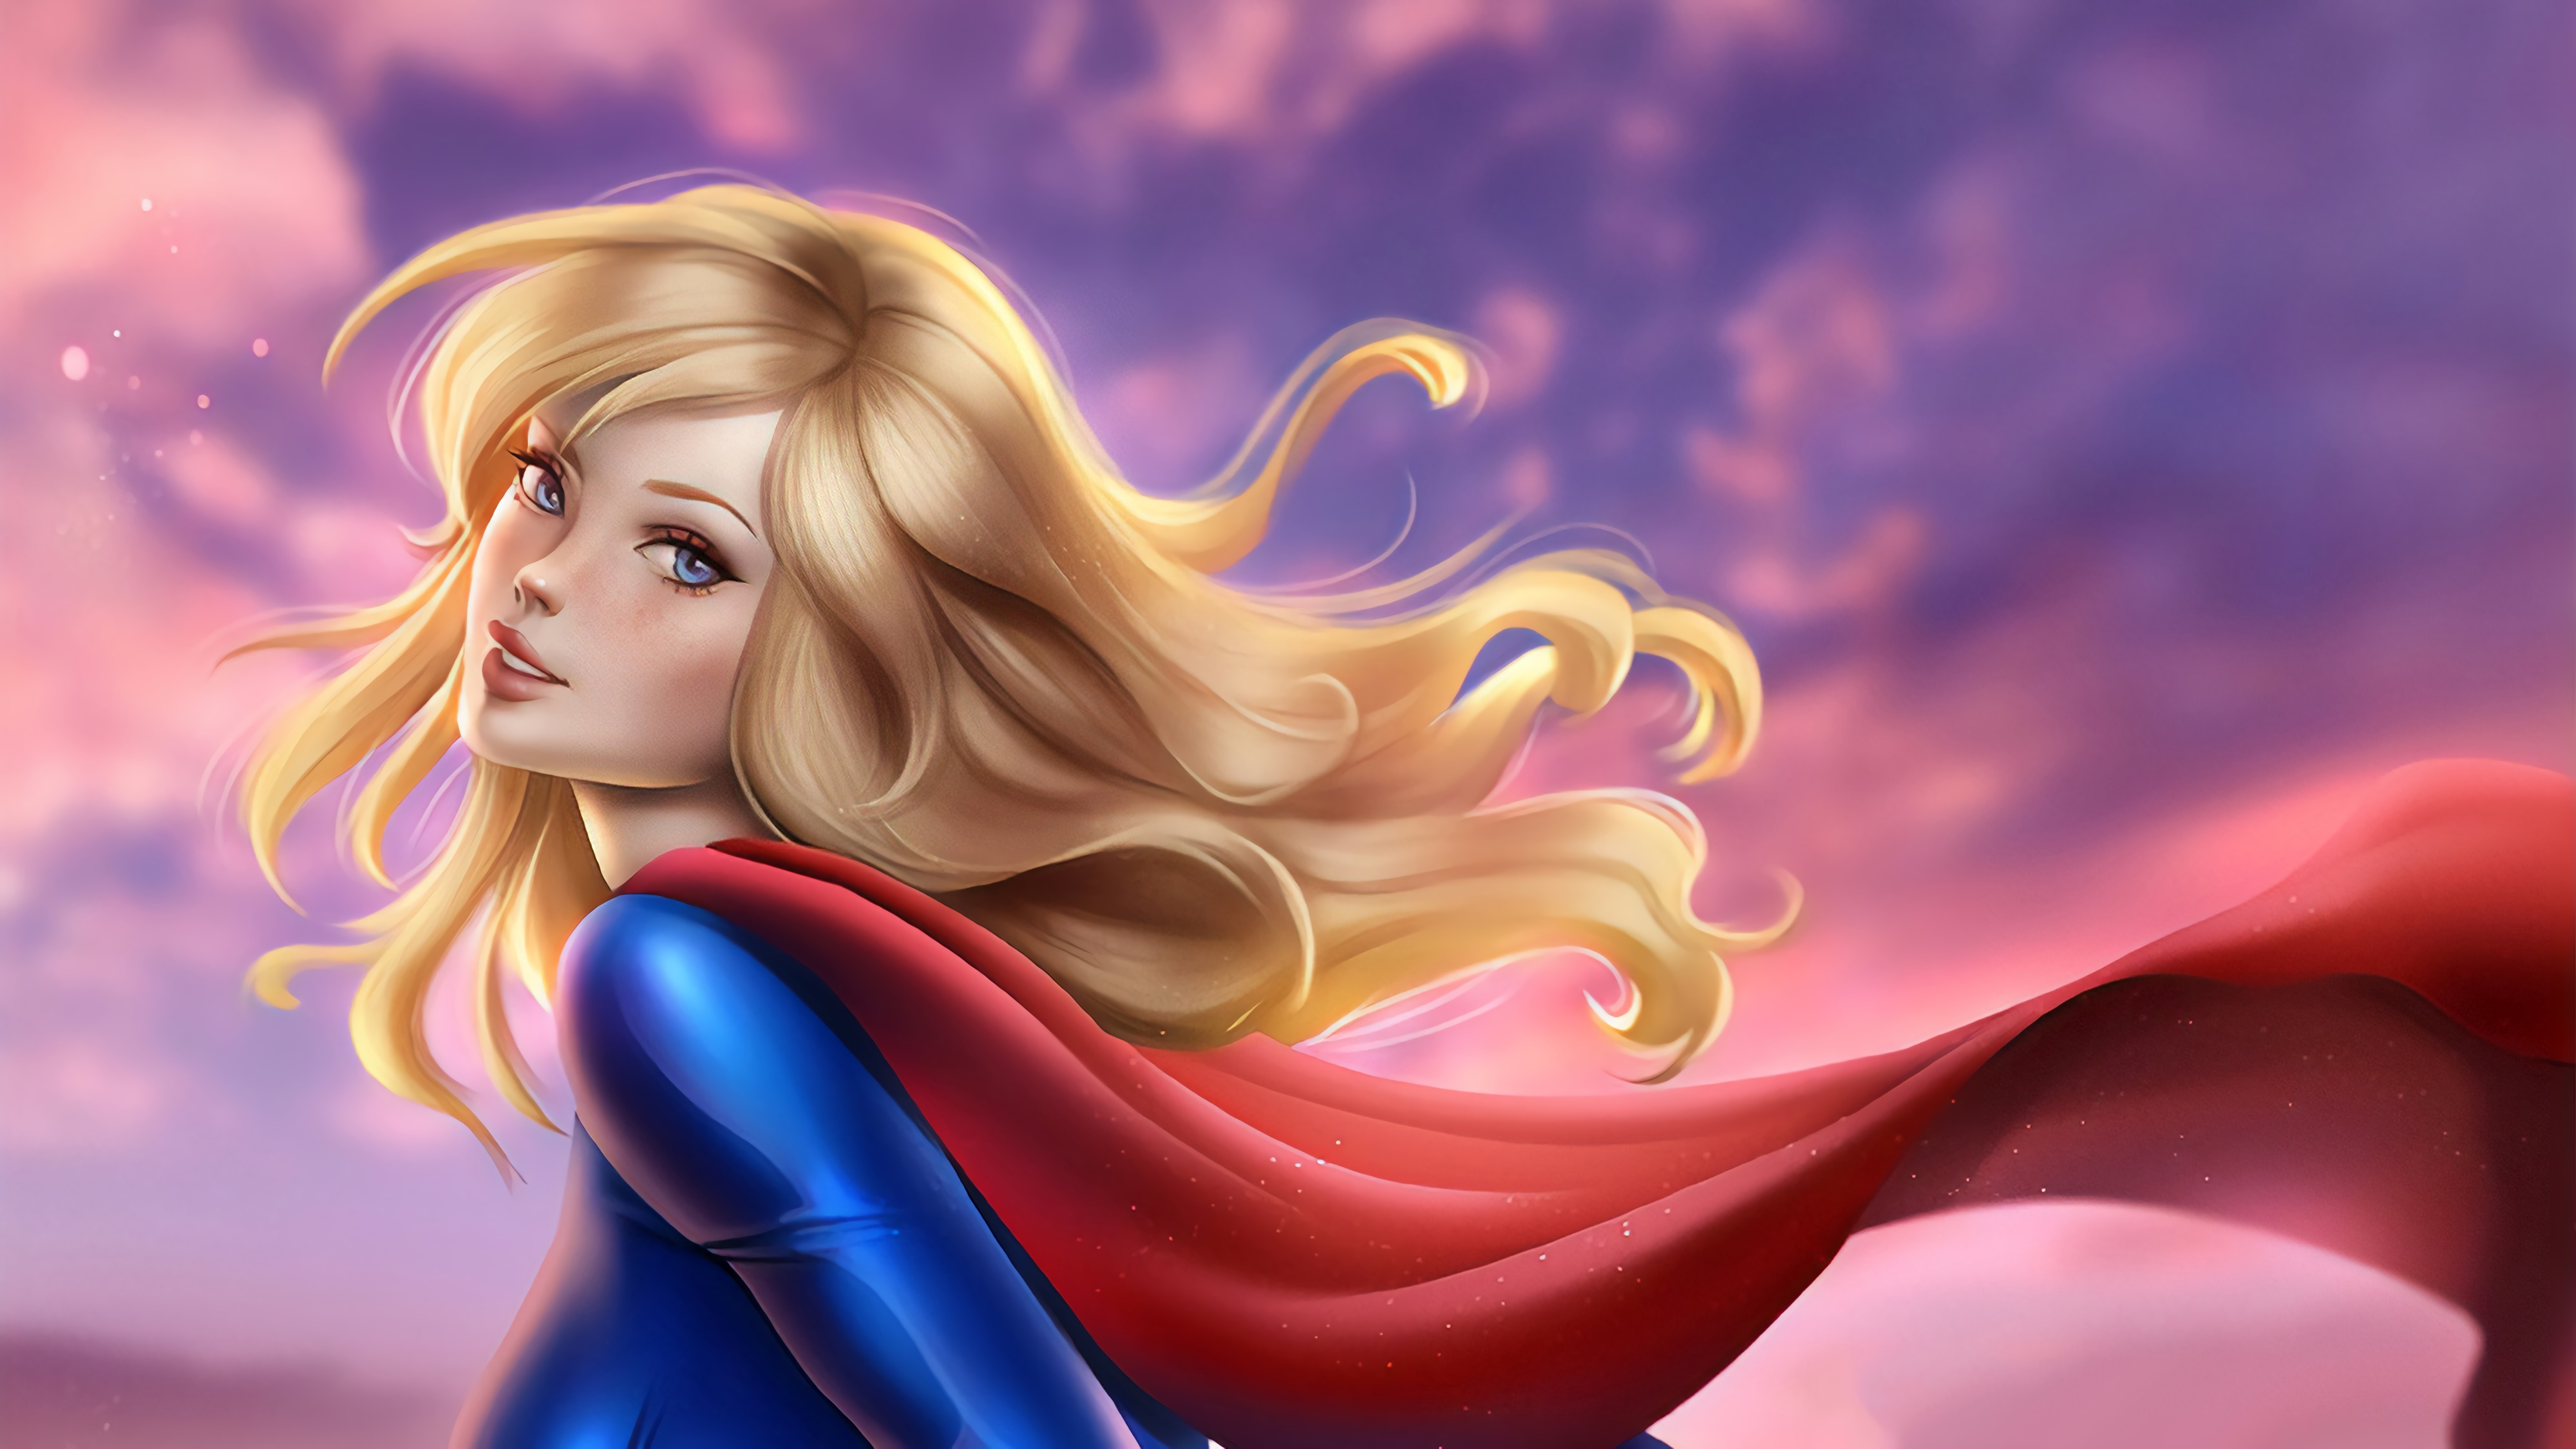 Supergirl 4k Ultra HD Wallpaper by AyyaSAP